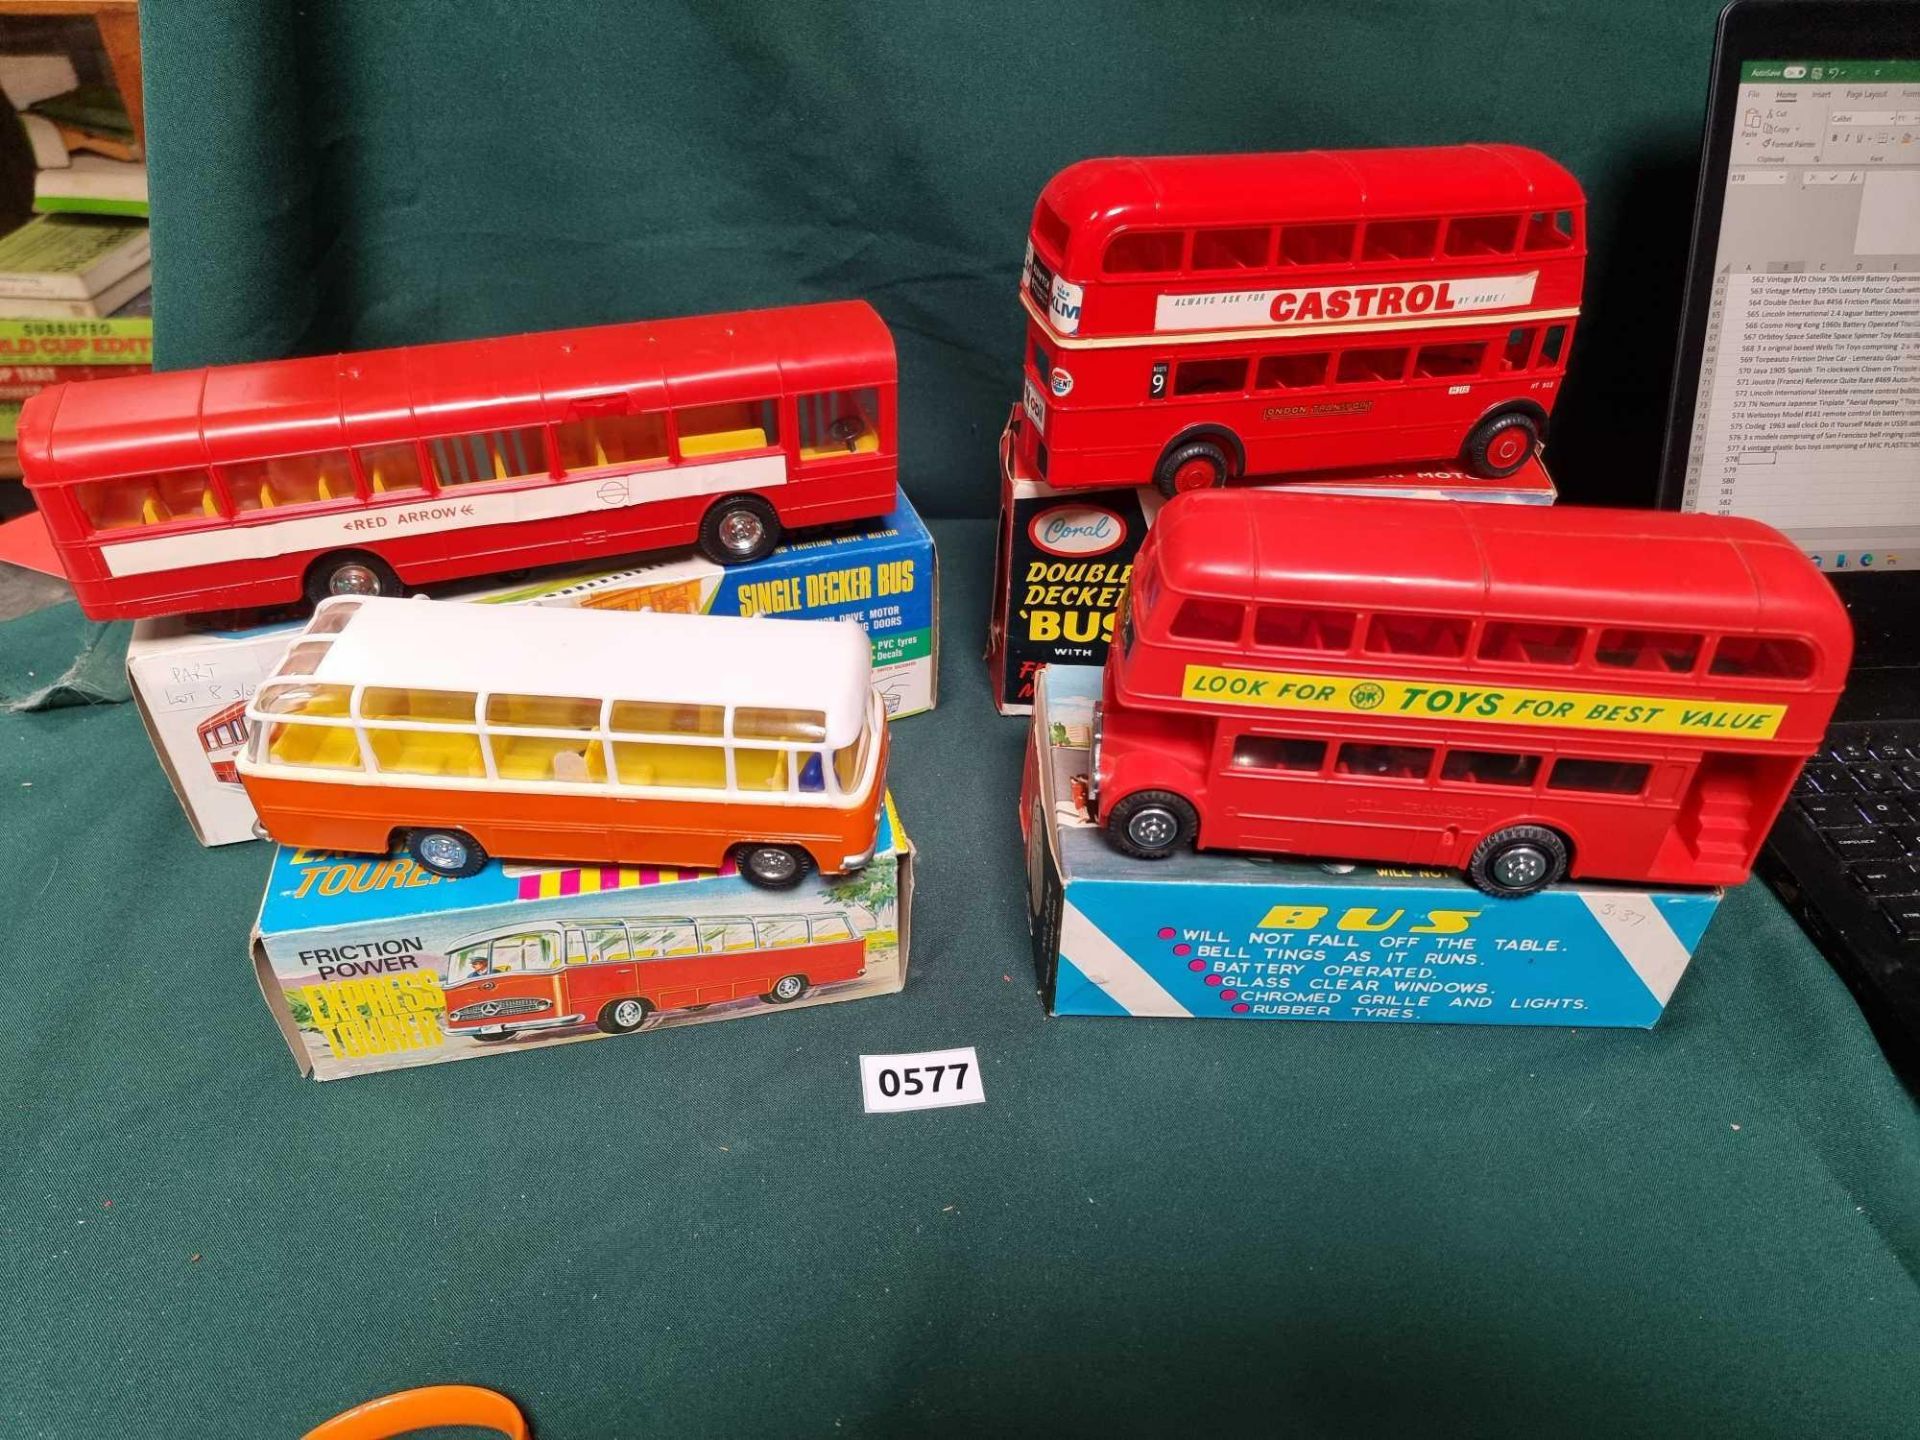 4 Vintage Plastic Bus Toys Comprising Of NFIC Plastic Model No.3107 "Red Arrow" Single Decker, Coral